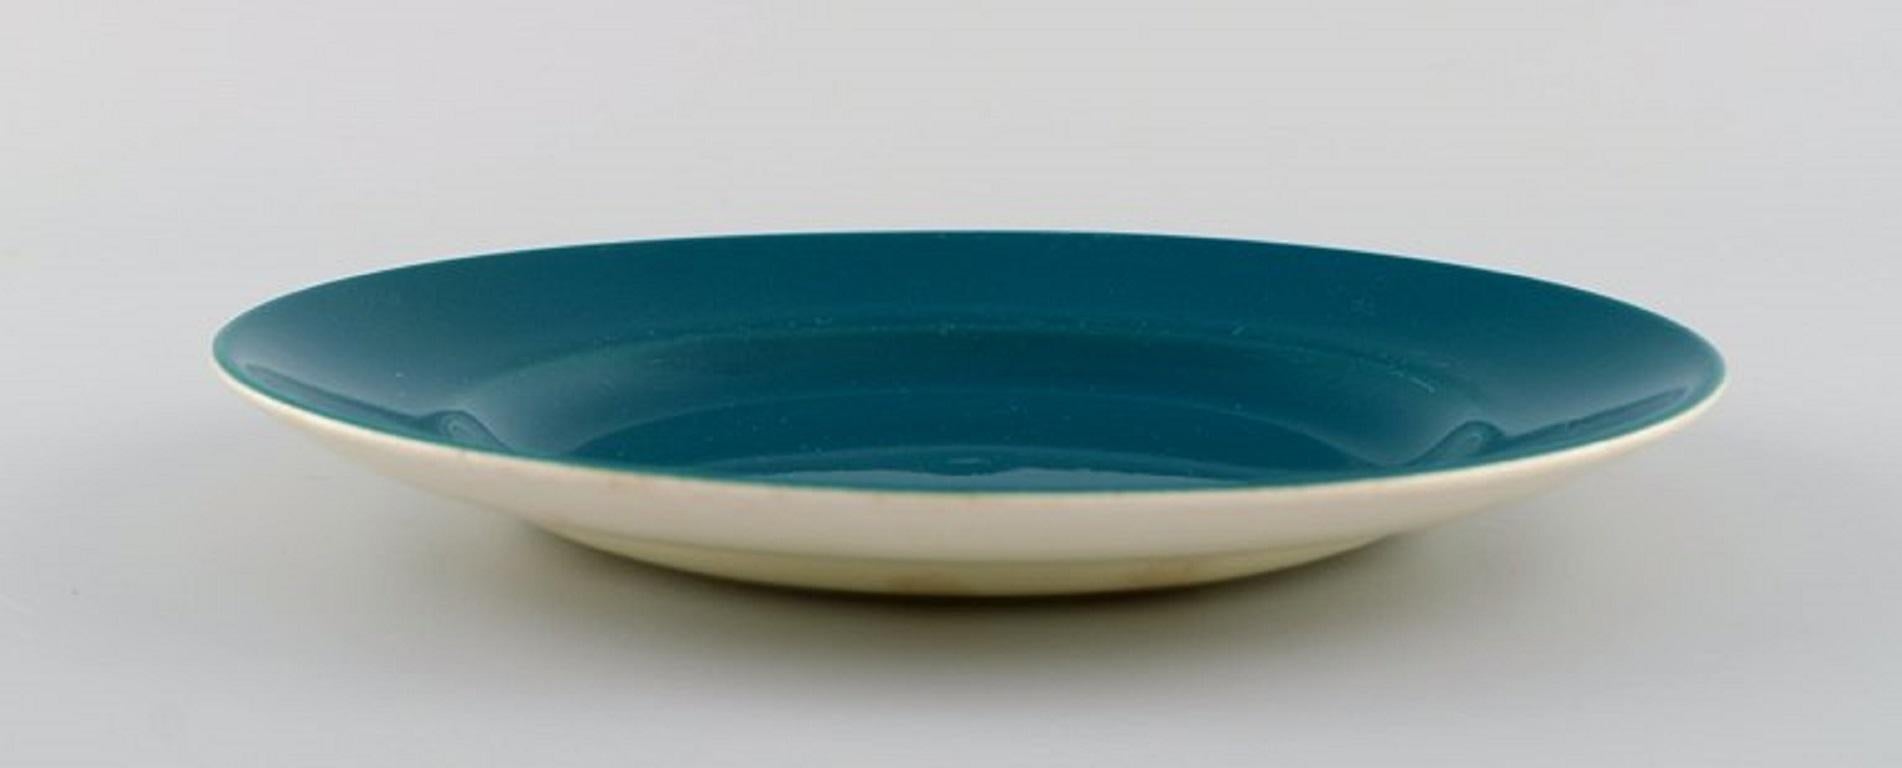 Scandinavian Modern Five Royal Copenhagen / Aluminia Confetti Plates in Turquoise Glazed Faience